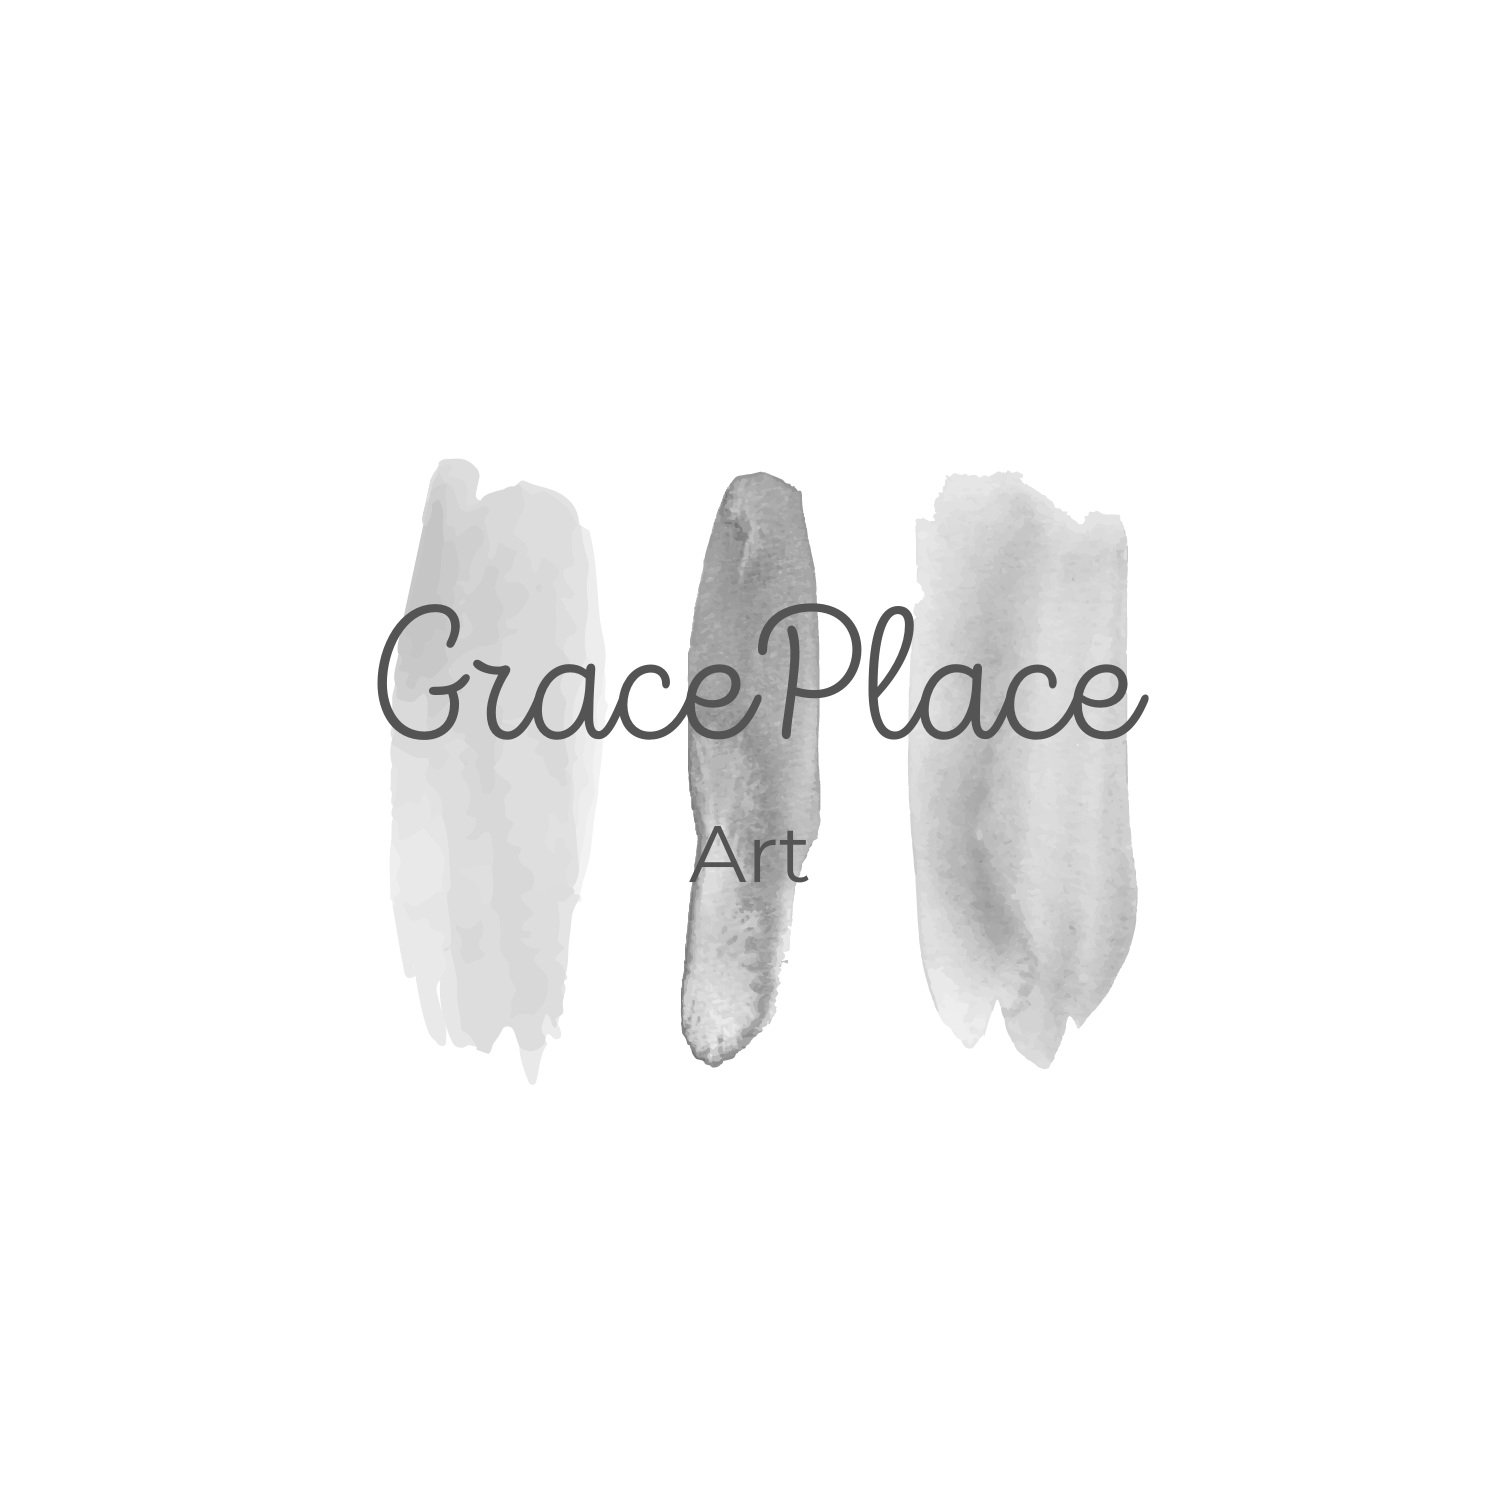 Grace+Place+Art+logo.jpg